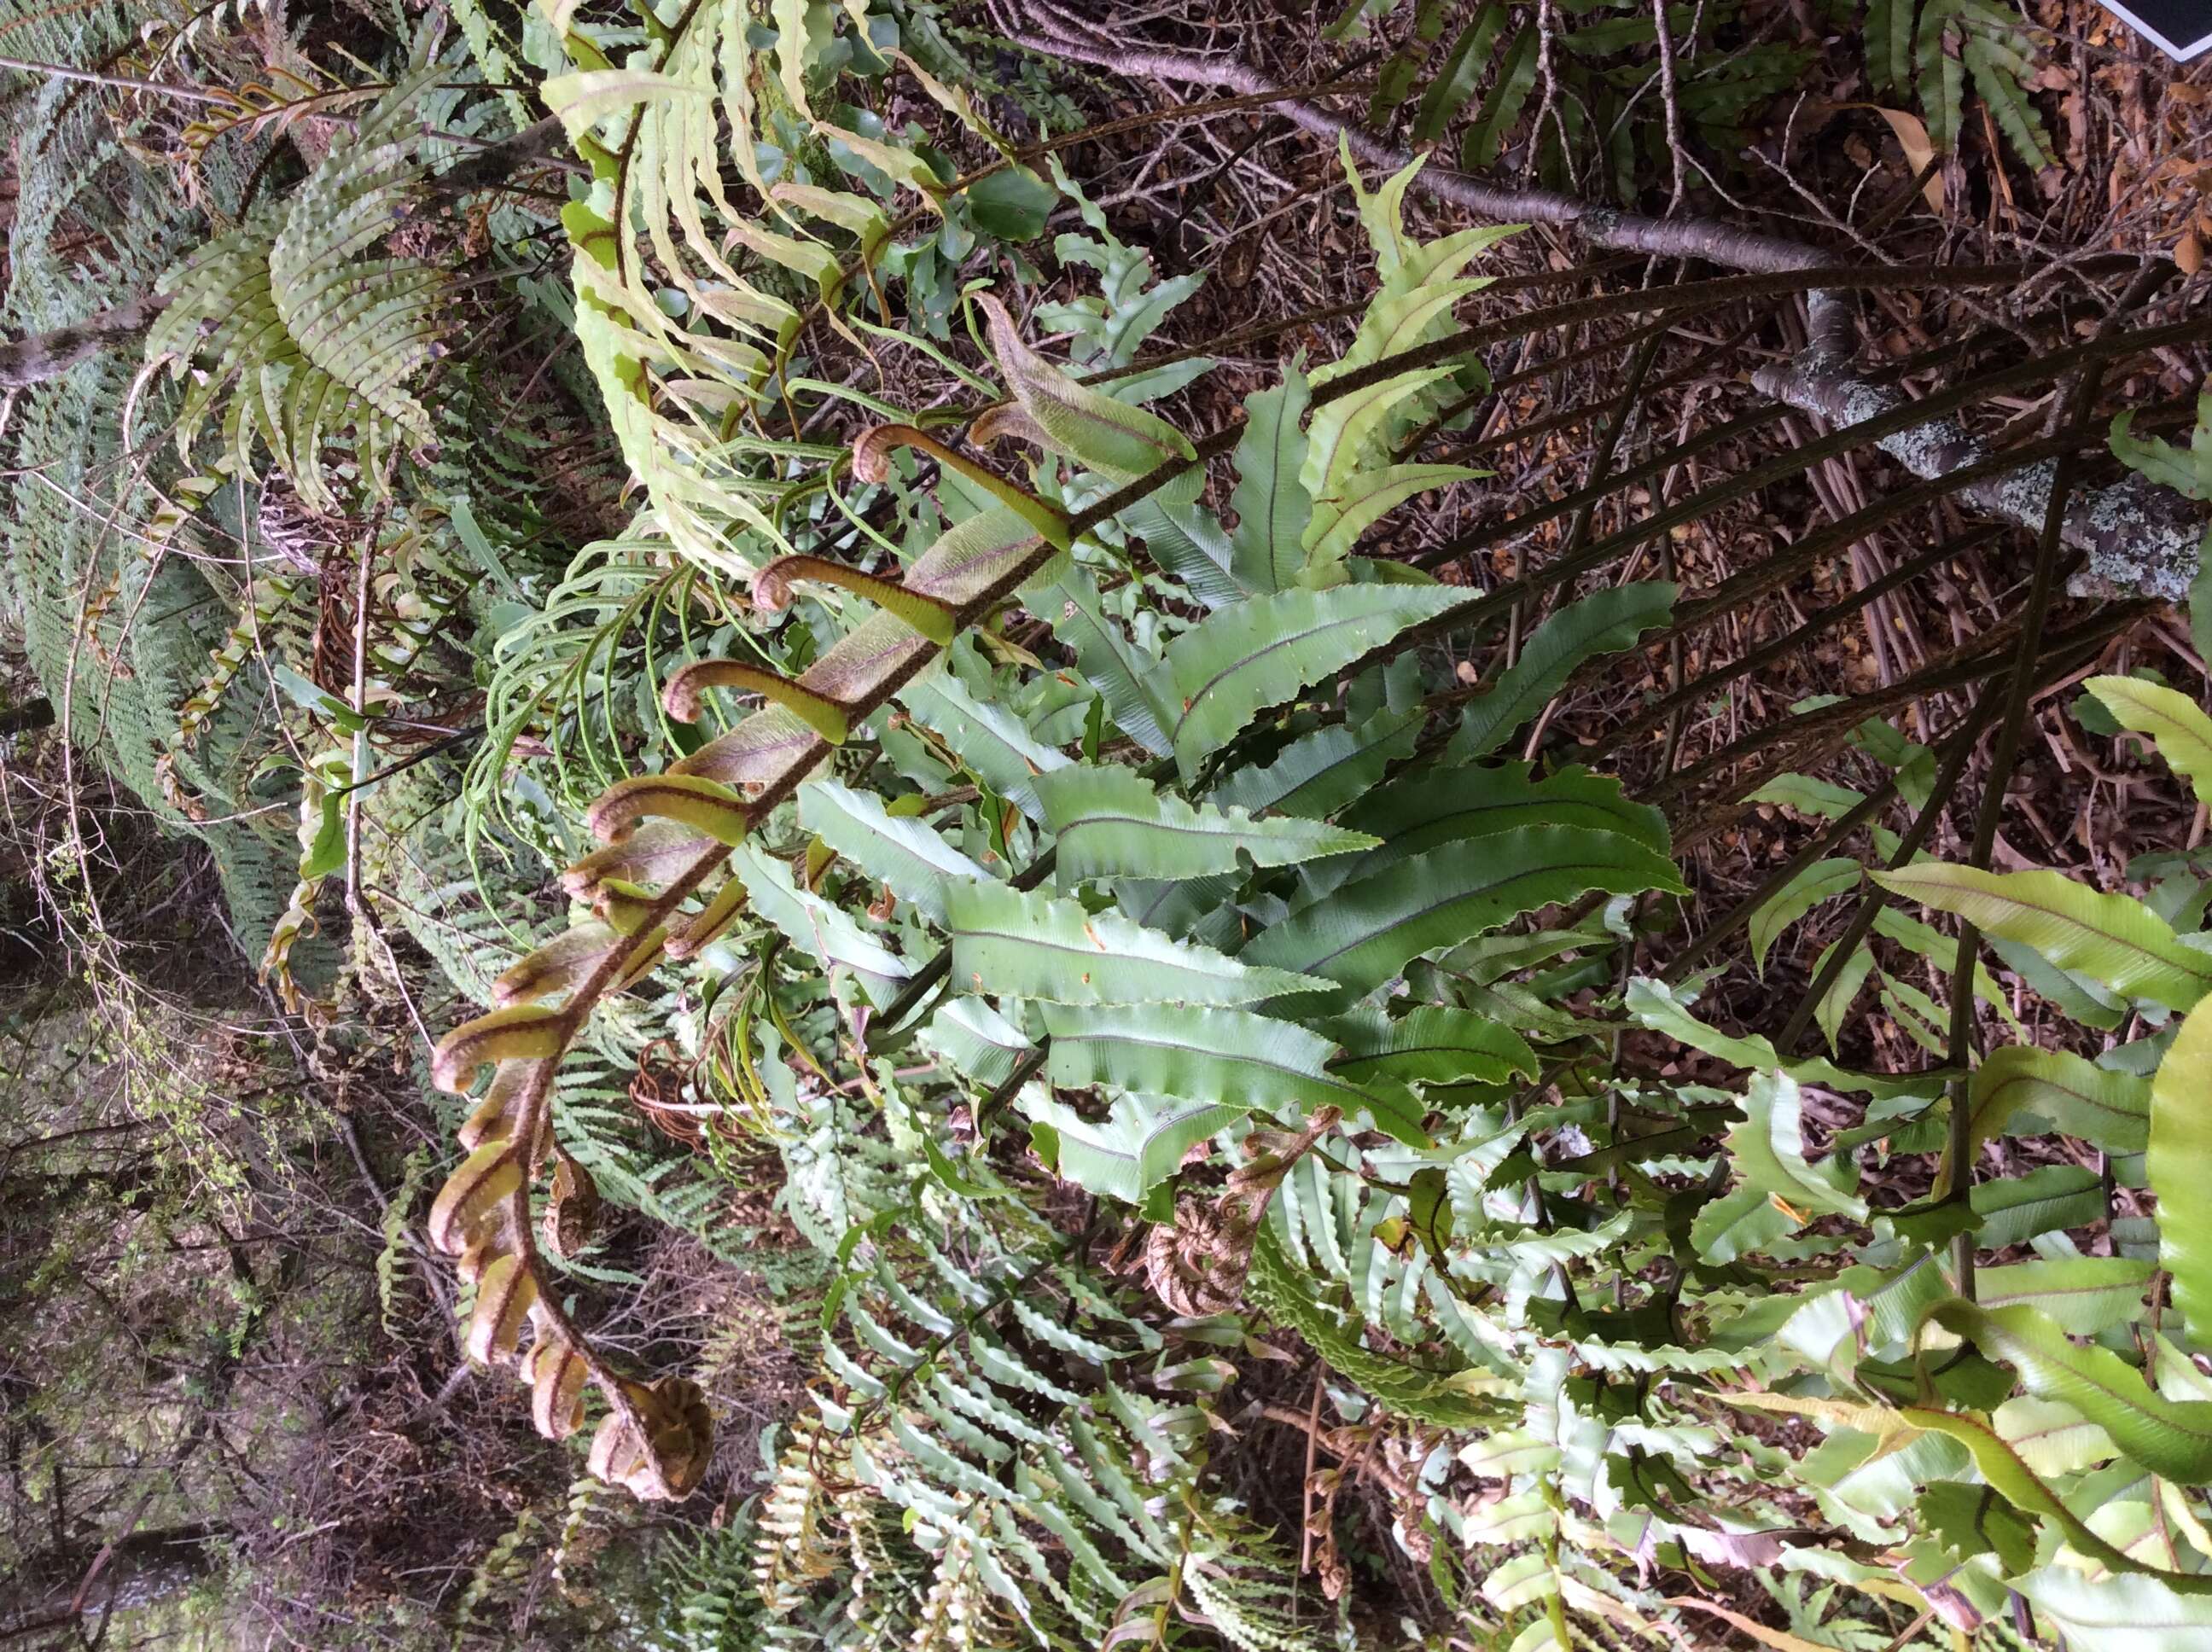 Image of Parablechnum novae-zelandiae (T. C. Chambers & P. A. Farrant) Gasper & Salino